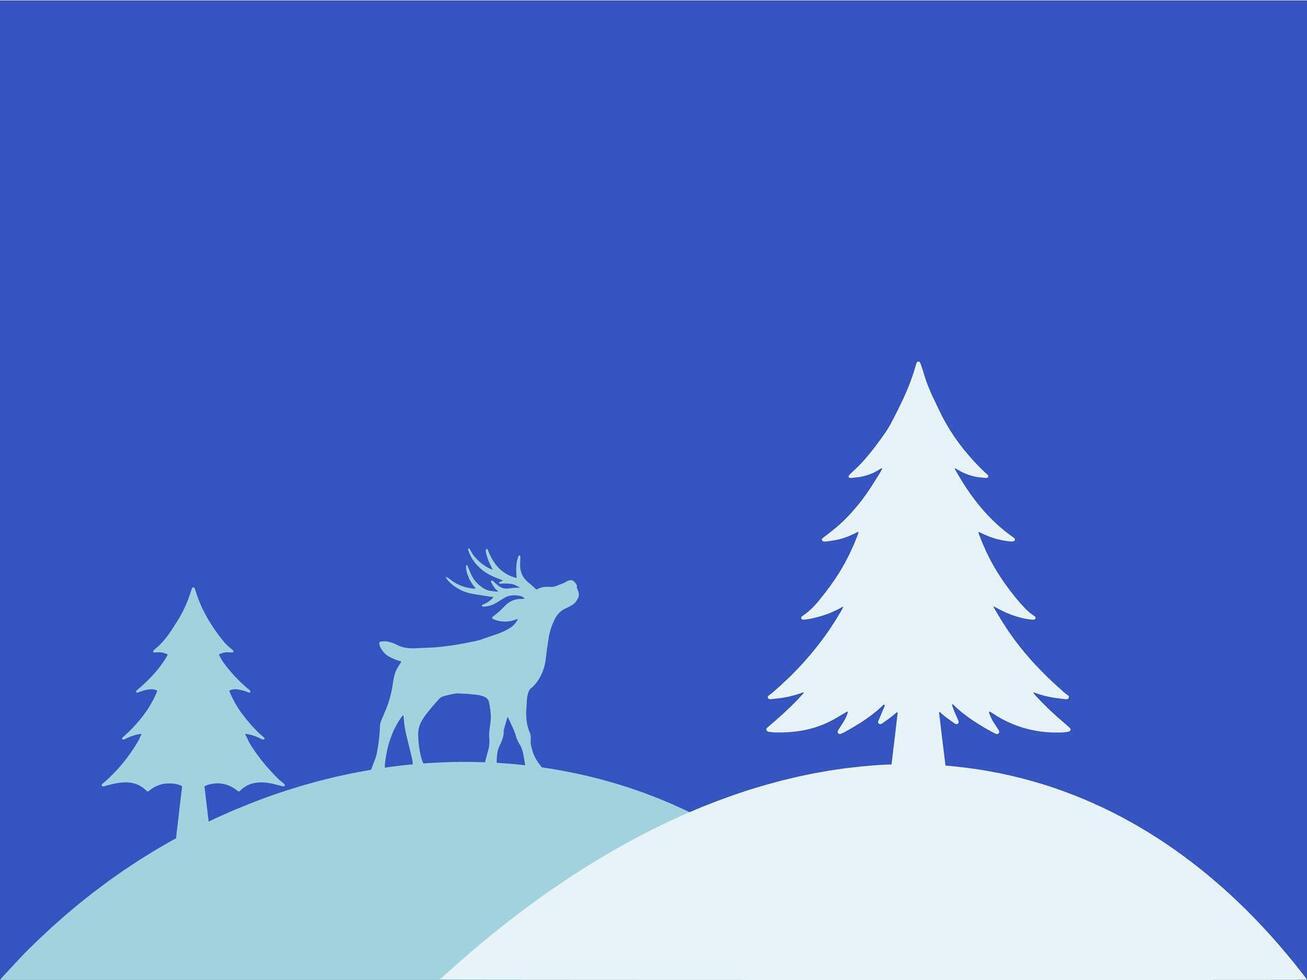 Christmas Tree Snow Background Illustration vector